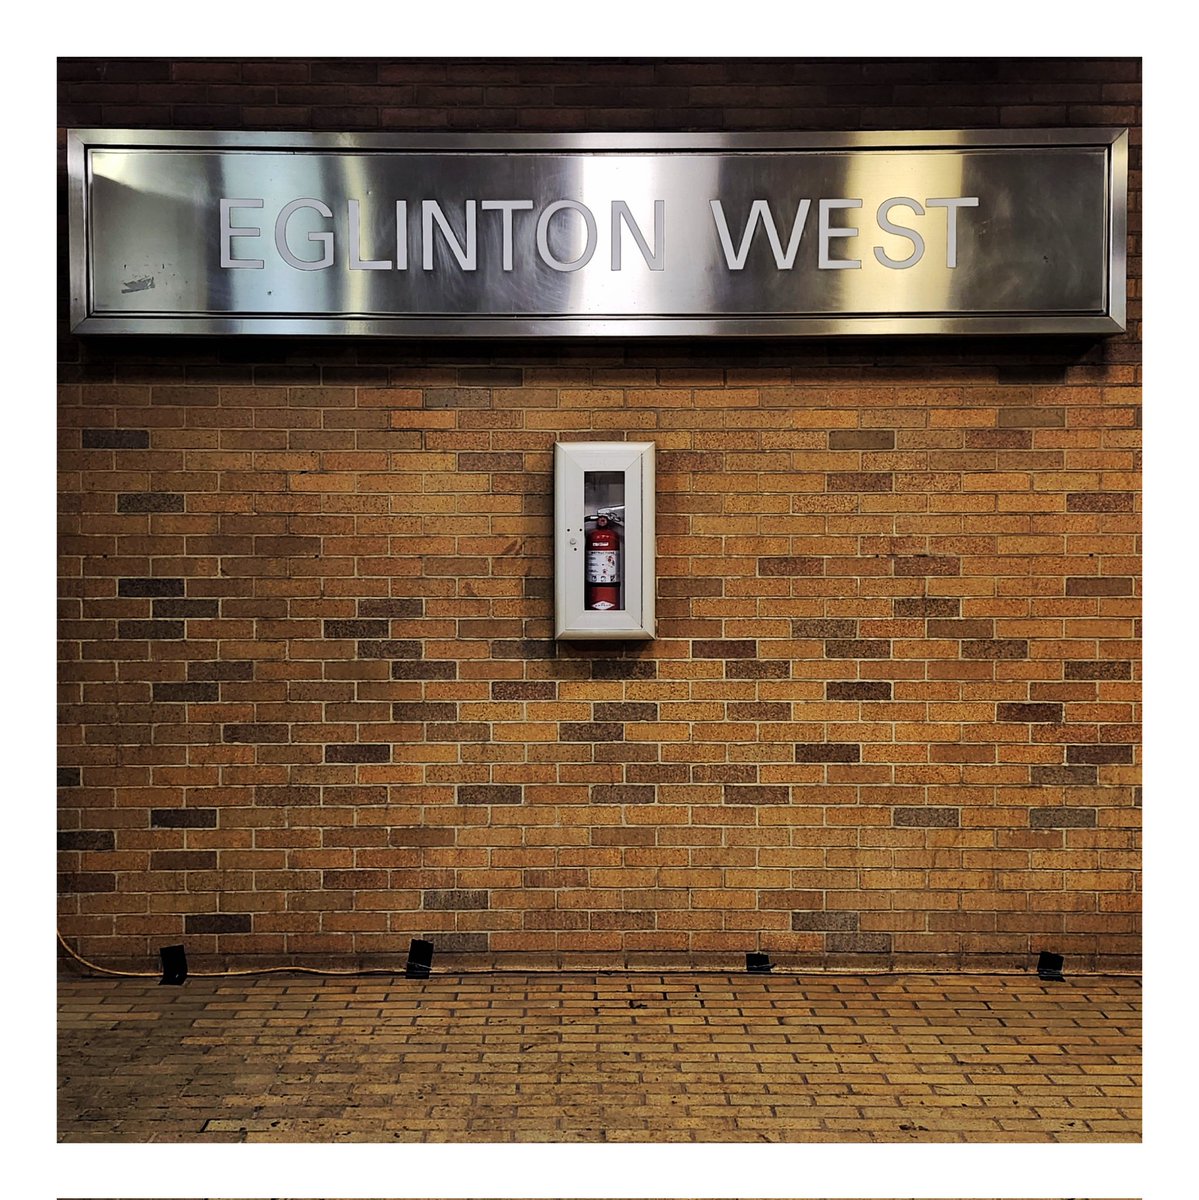 Eglinton West. #TTC #Toronto #SpadinaSubway #EglintonWestStation #CedarvaleStation #Signage #Photography